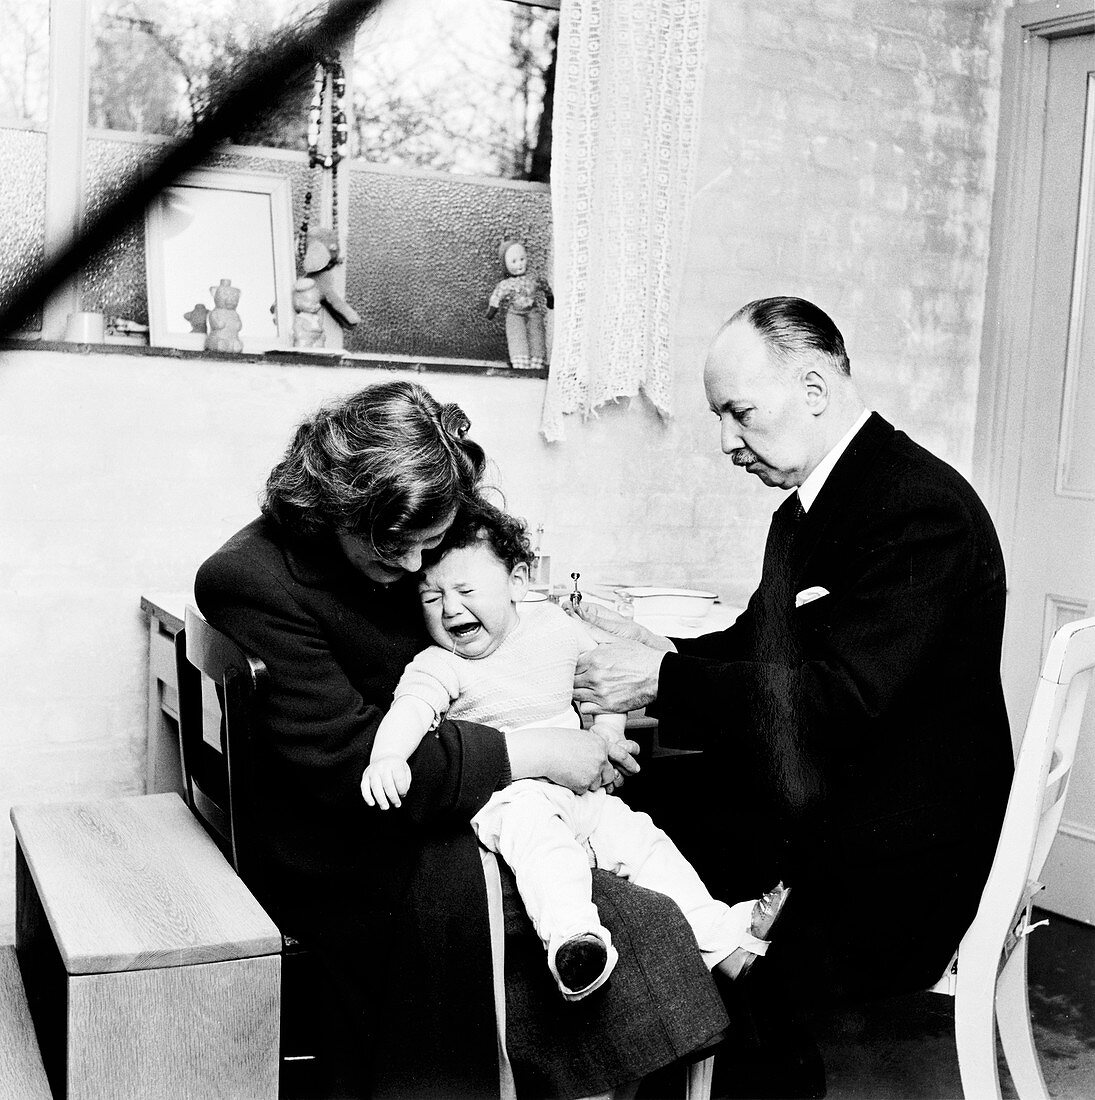 Baby being immunised, London, 1953